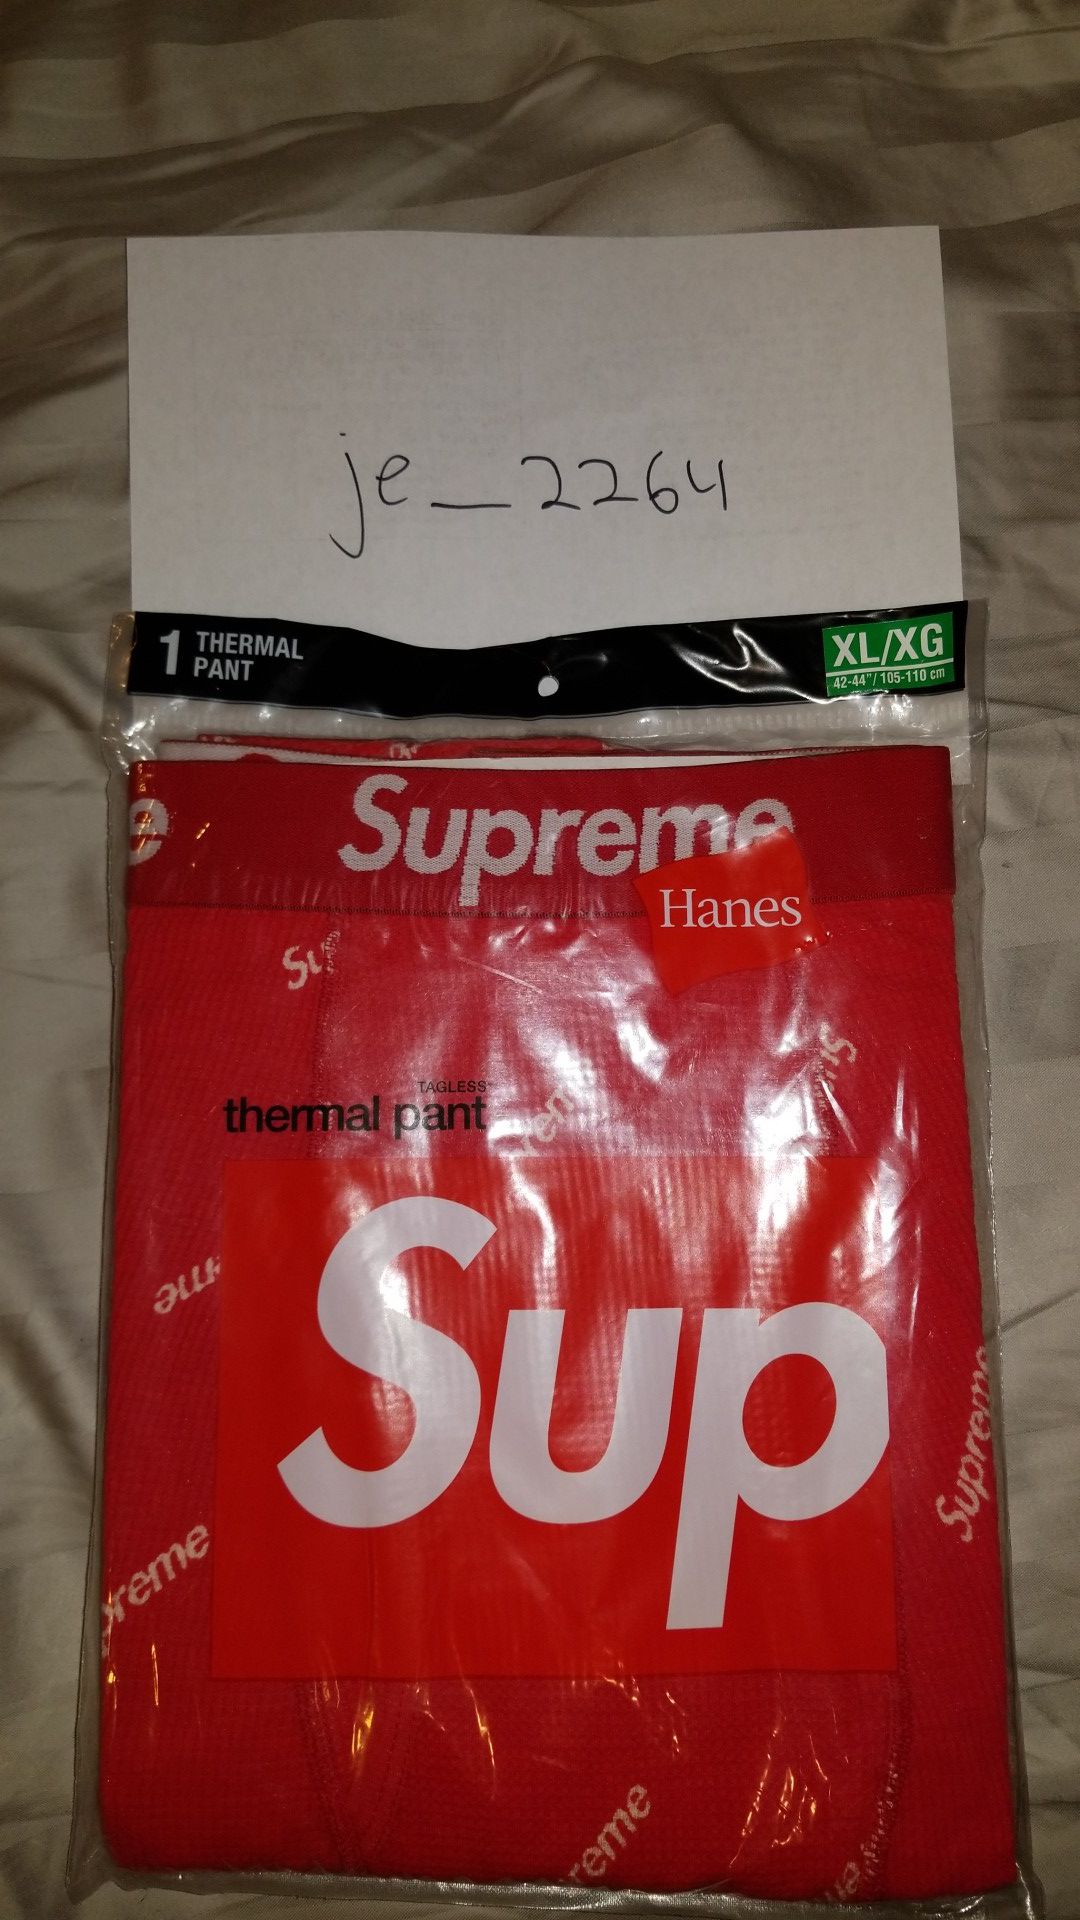 (XL) Supreme Hanes Red Logos Thermal Pant (1 pack)